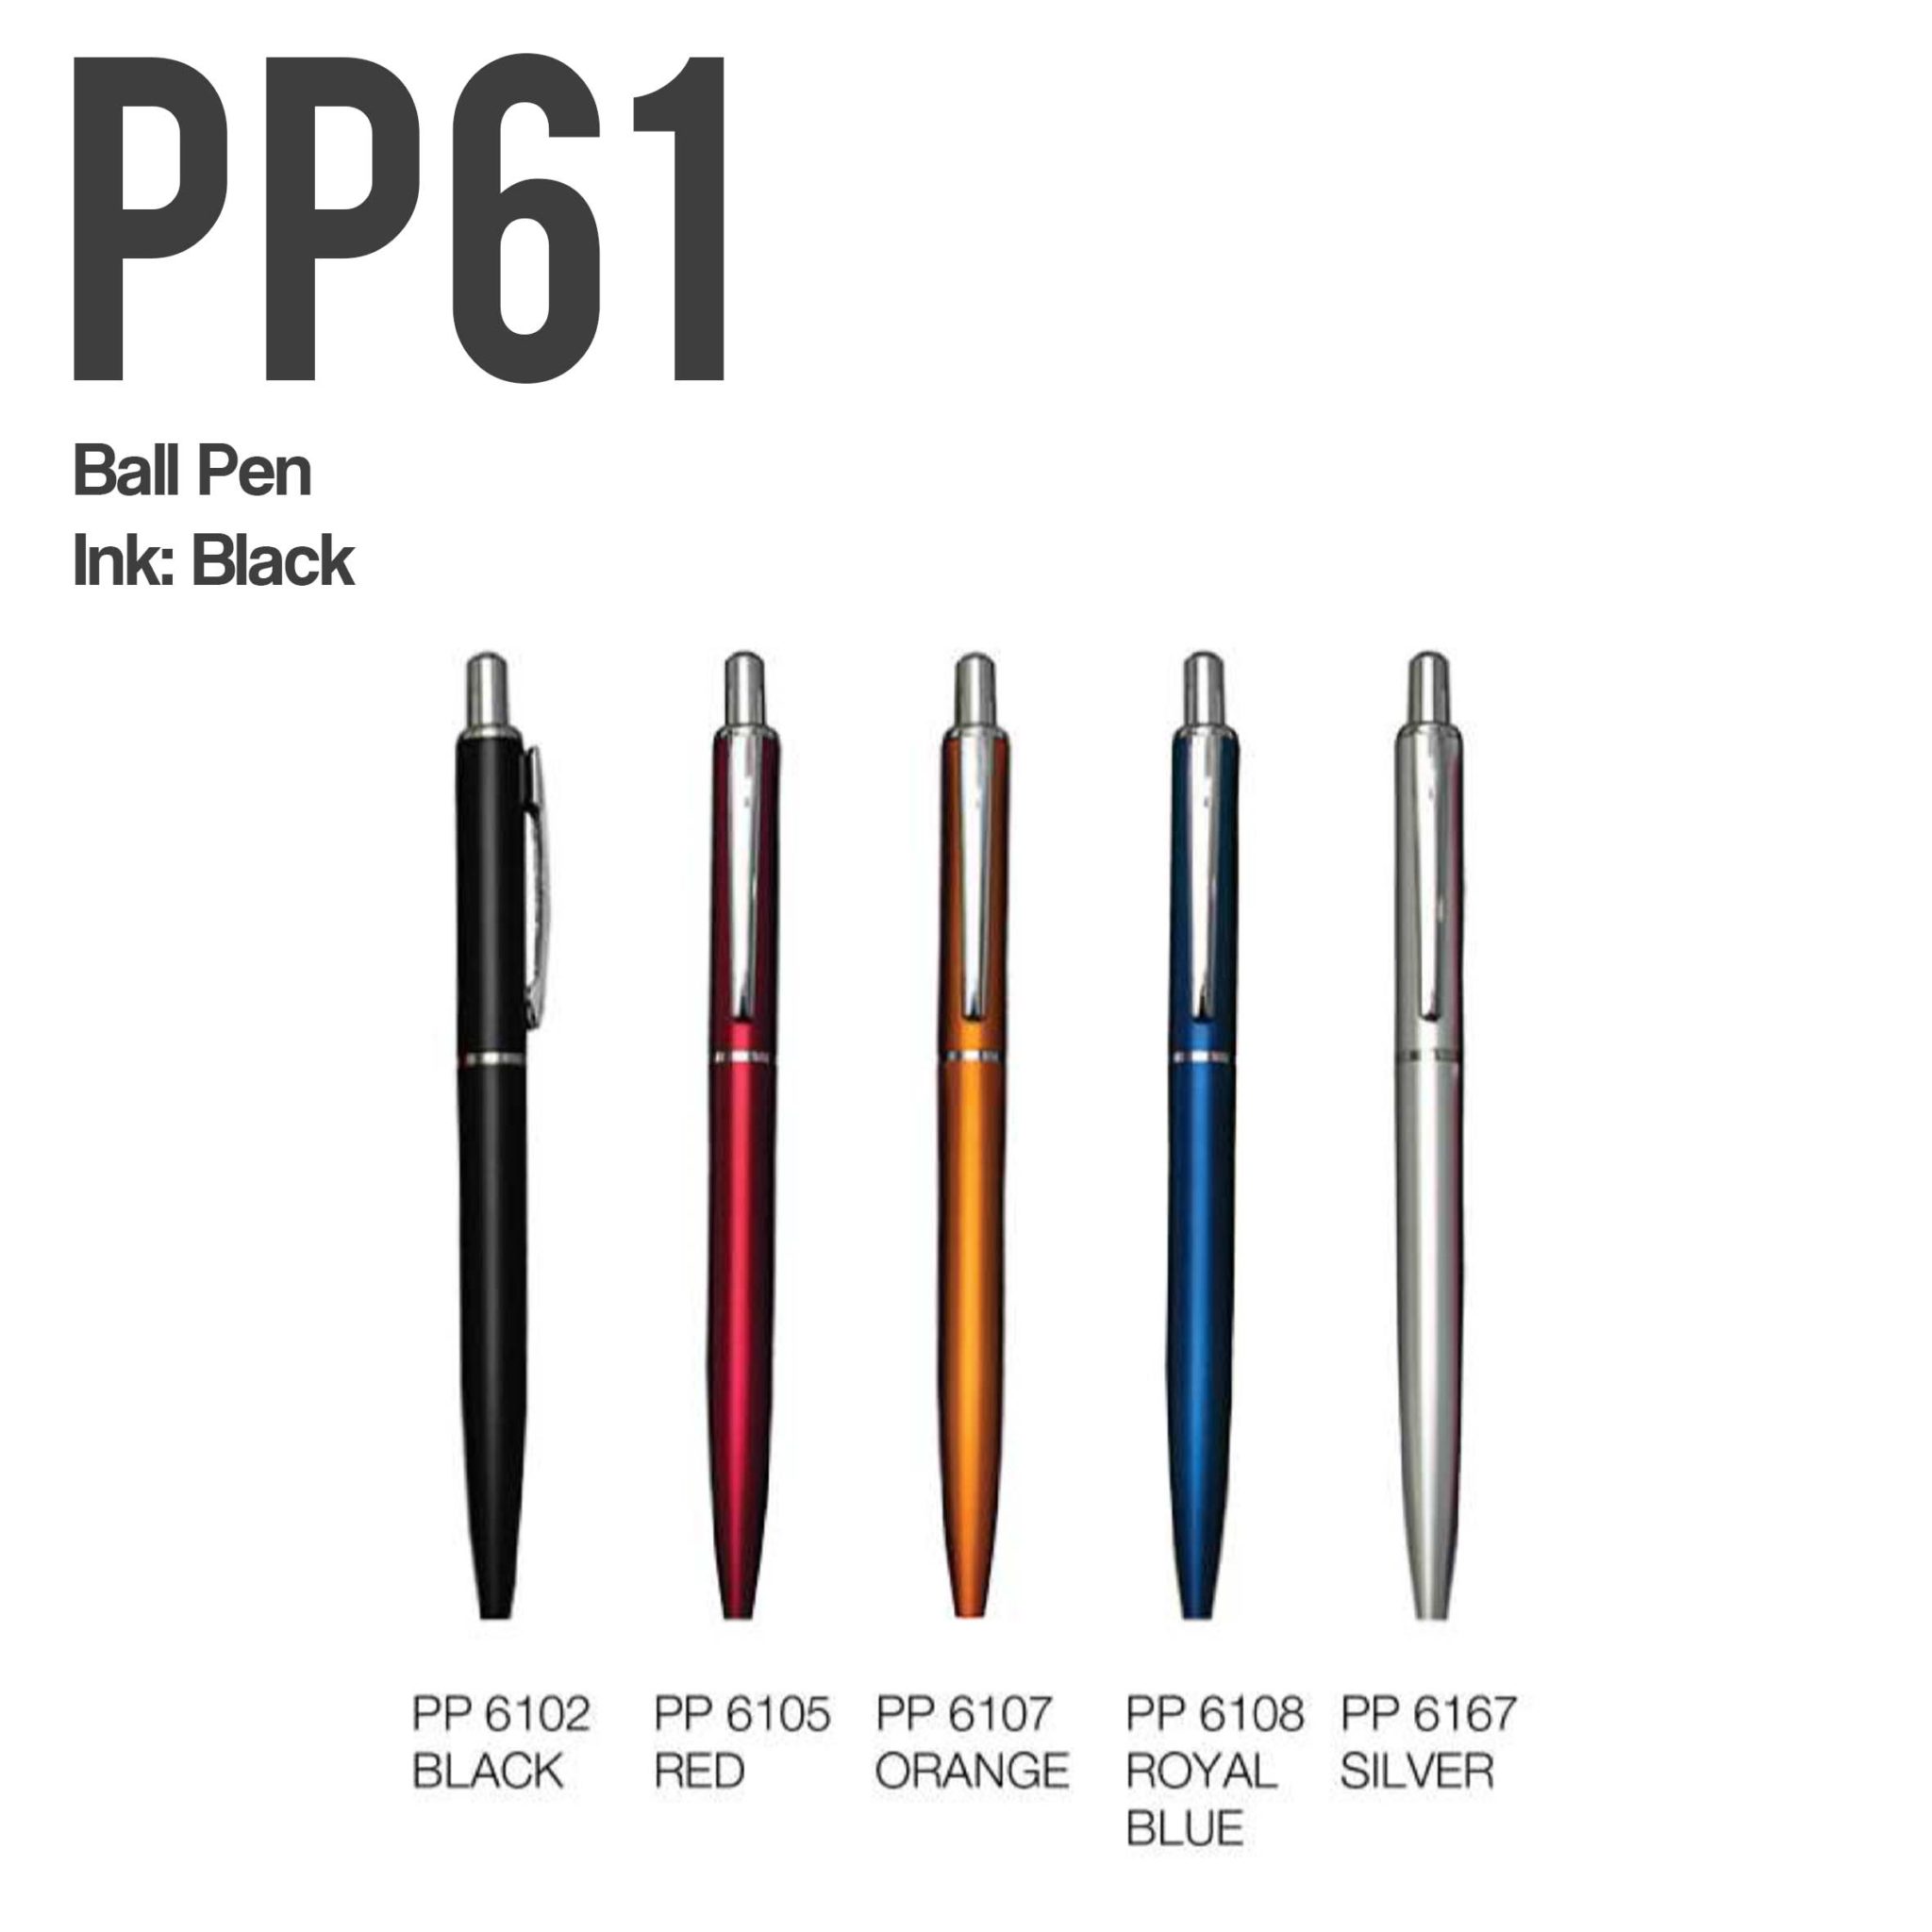 PP61 Plastic pen scaled